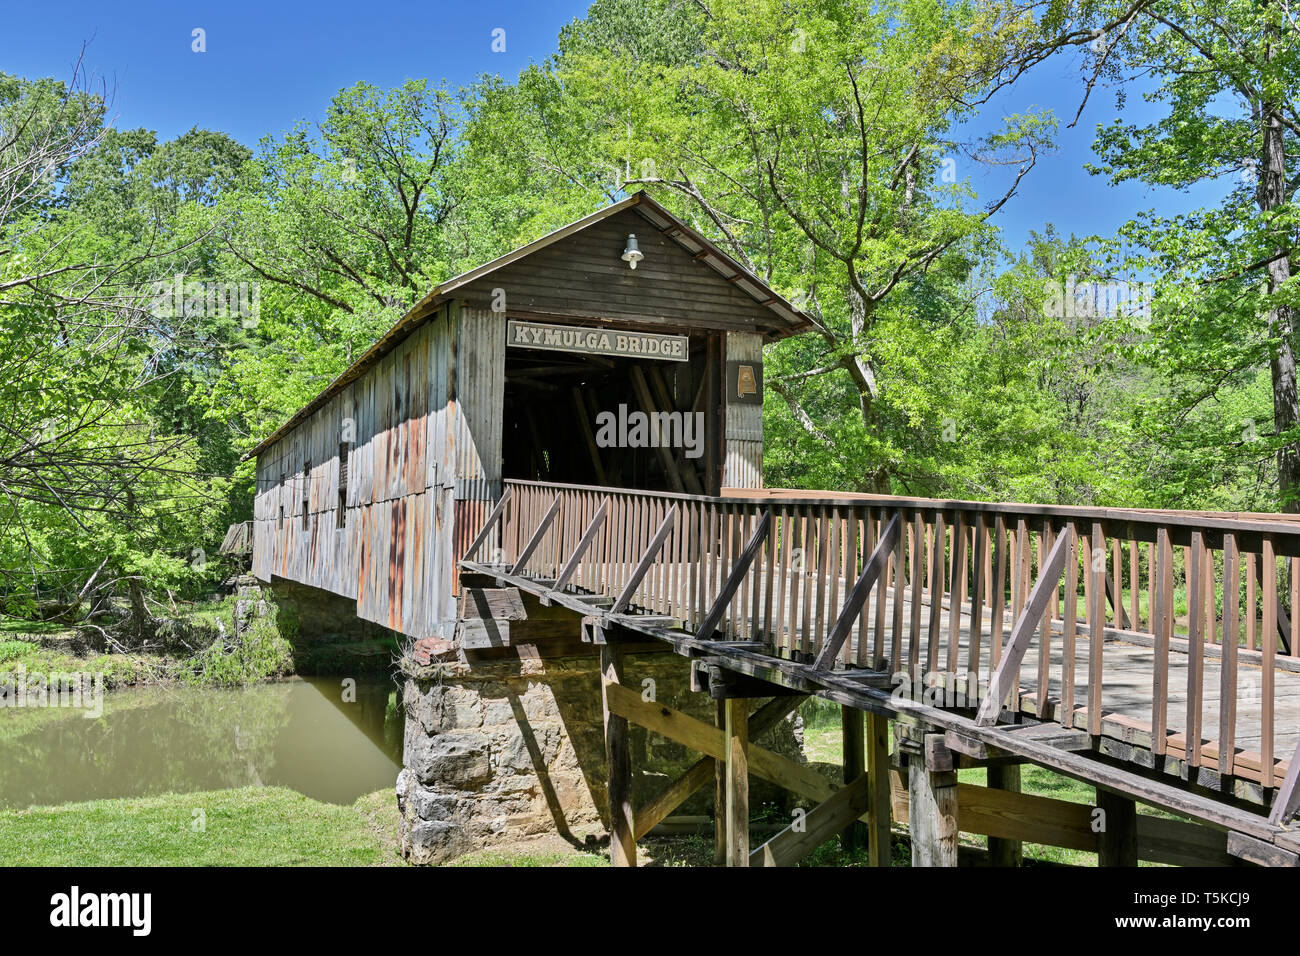 Kymulga covered bridge over Talladega creek in Childersburg, Alabama, USA, an outdoor museum and park. Stock Photo